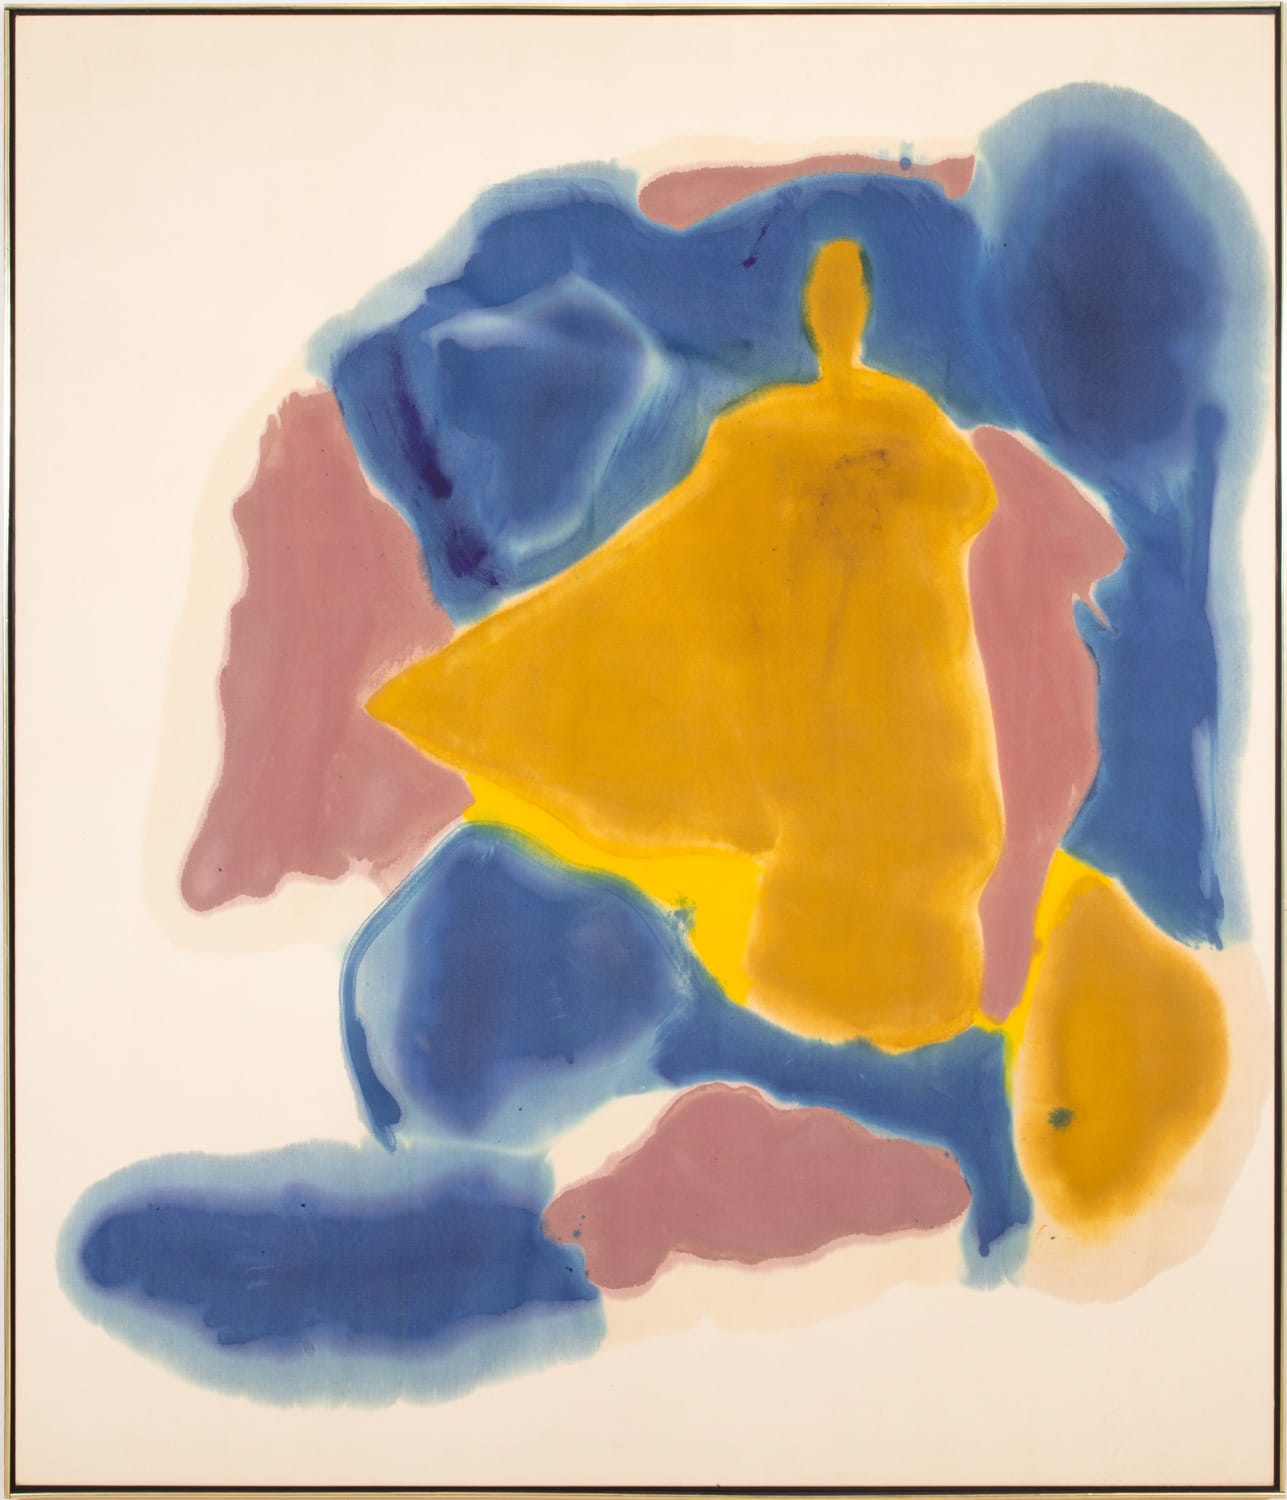 Helen Frankenthaler, Formations,1963–1964. Courtesy of Yares Art, New York City. 